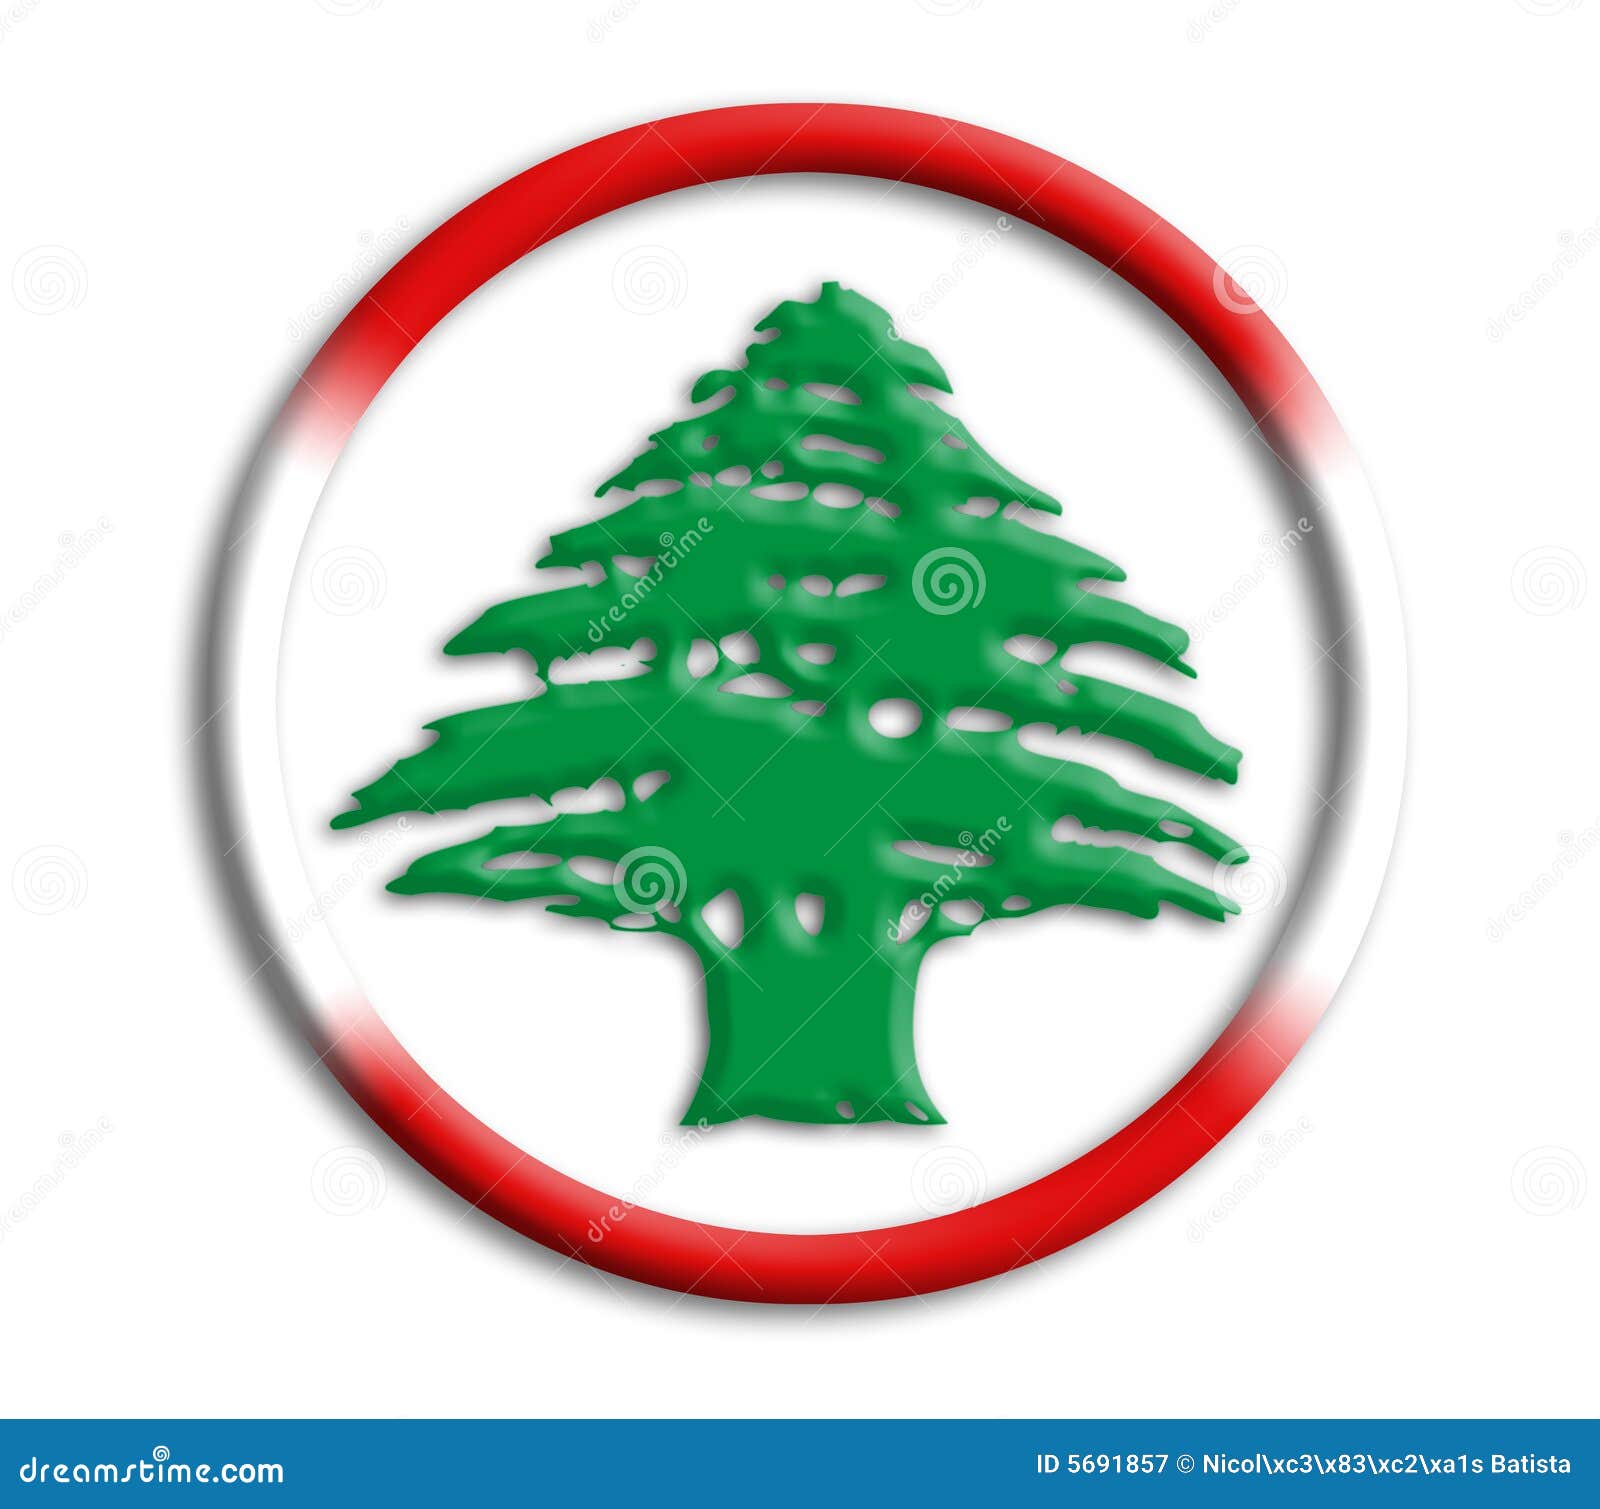 lebanon shield for olympics